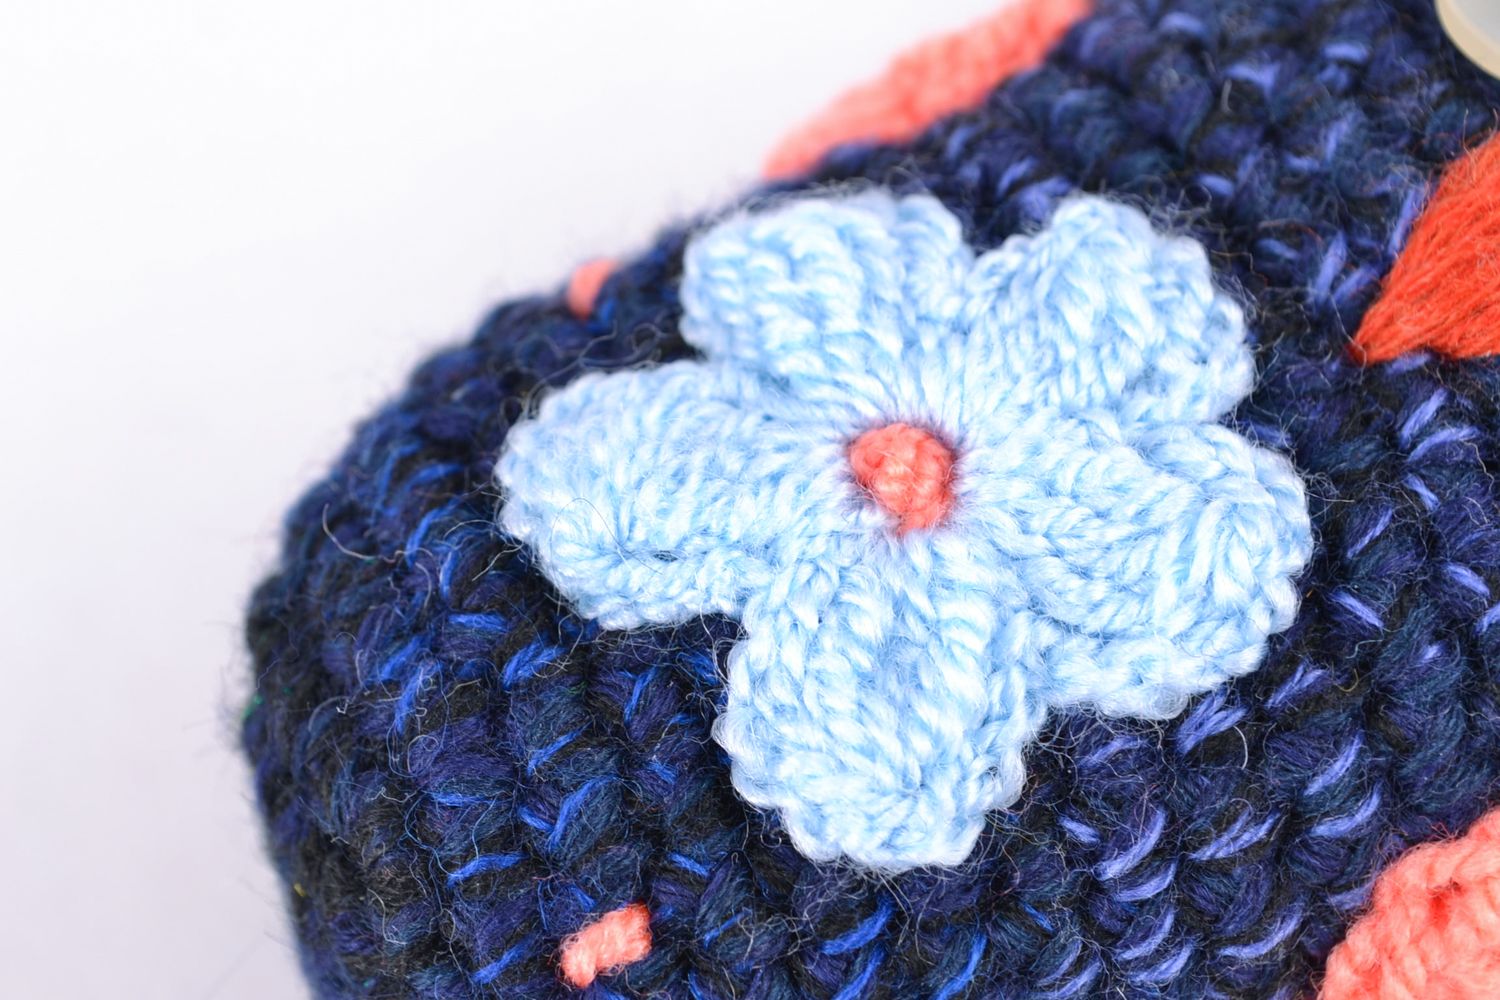 Soft crochet toy blue owl photo 3